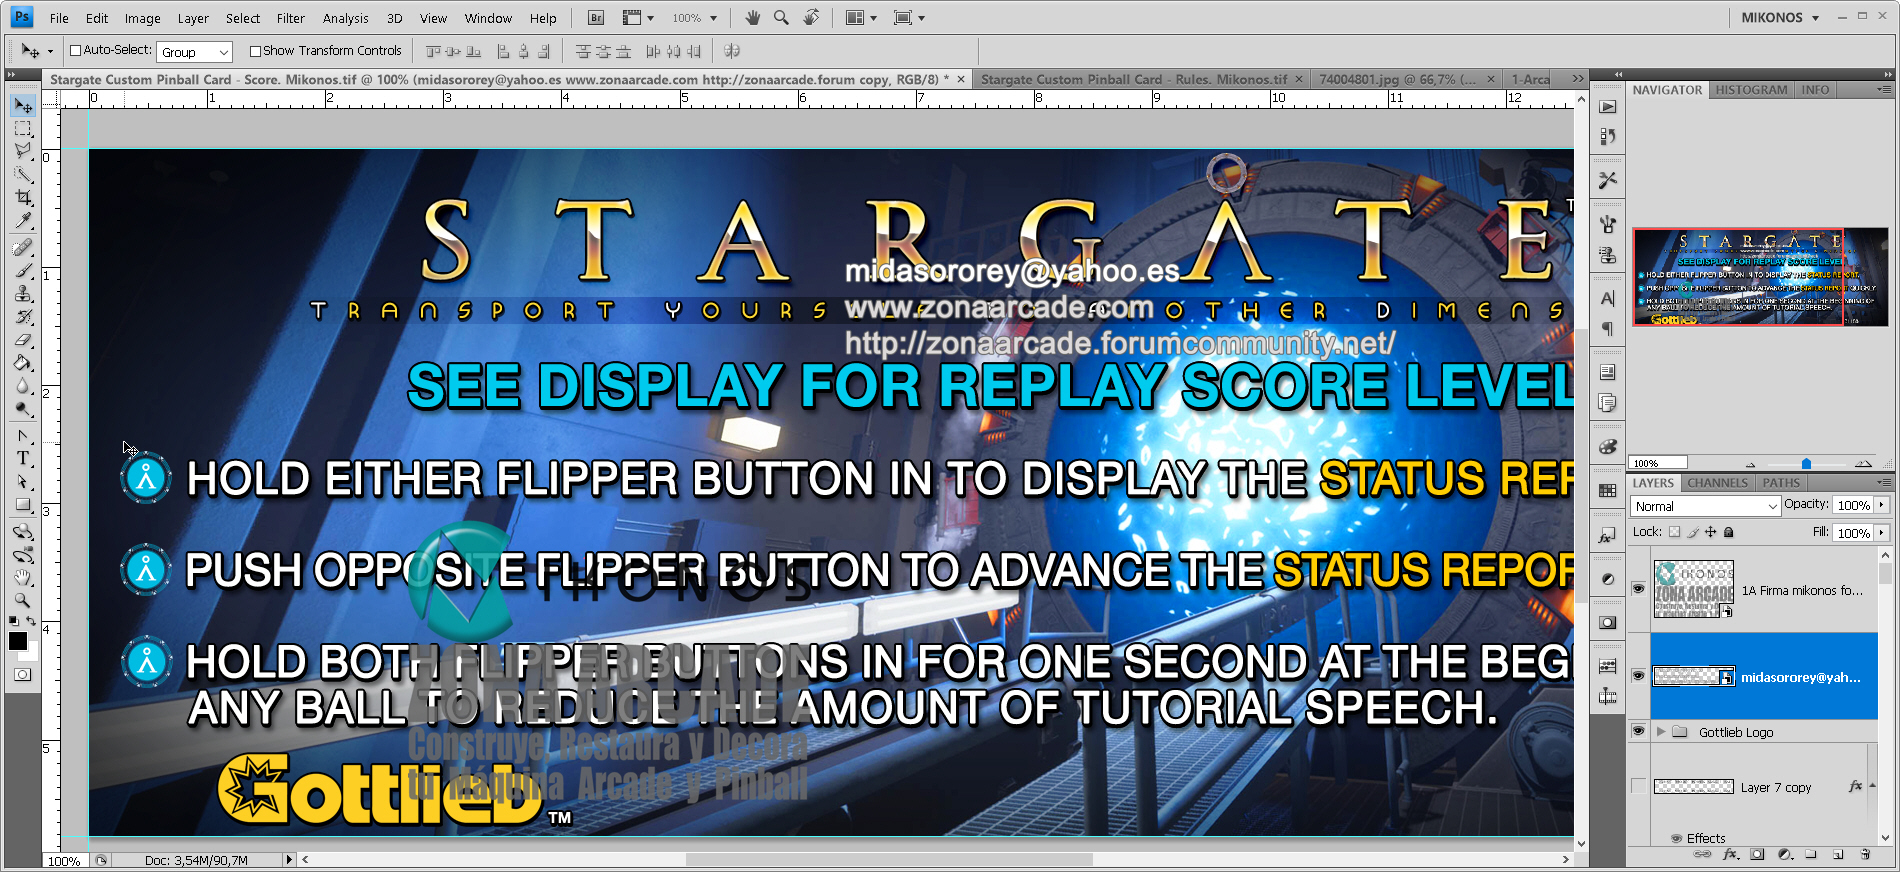 Stargate%20Pinball%20Card%20Customized%20-%20Score.%20Mikonos2.jpg